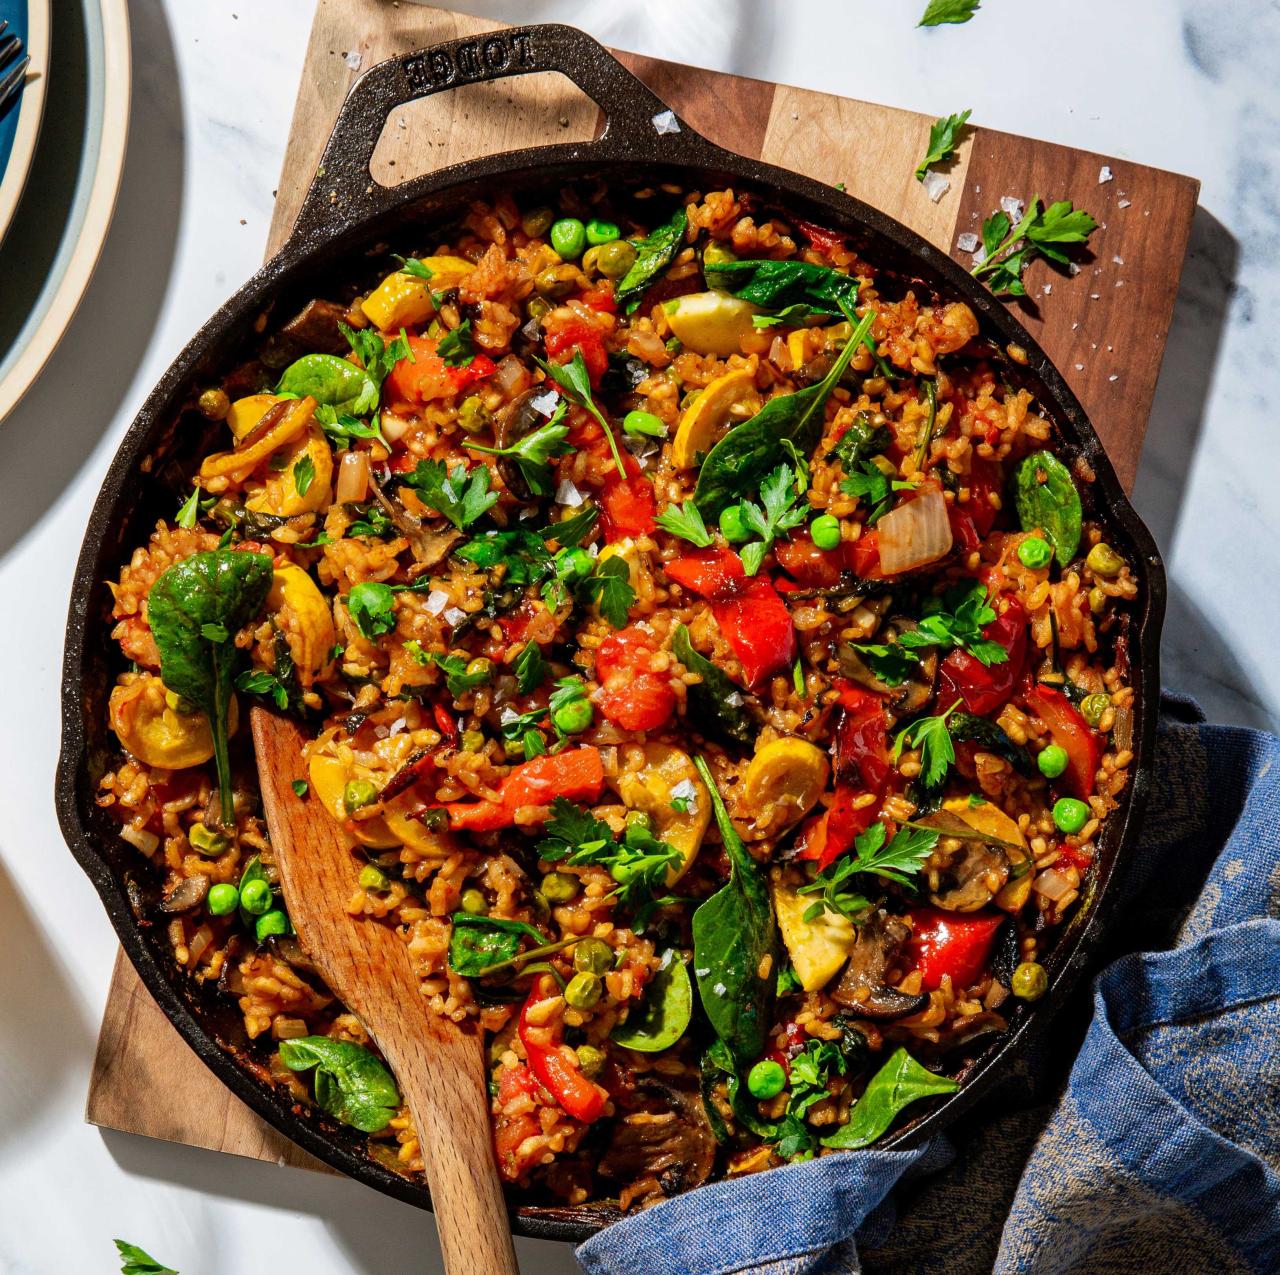 Best Vegetarian Paella Recipe - How to Make Vegetarian Paella